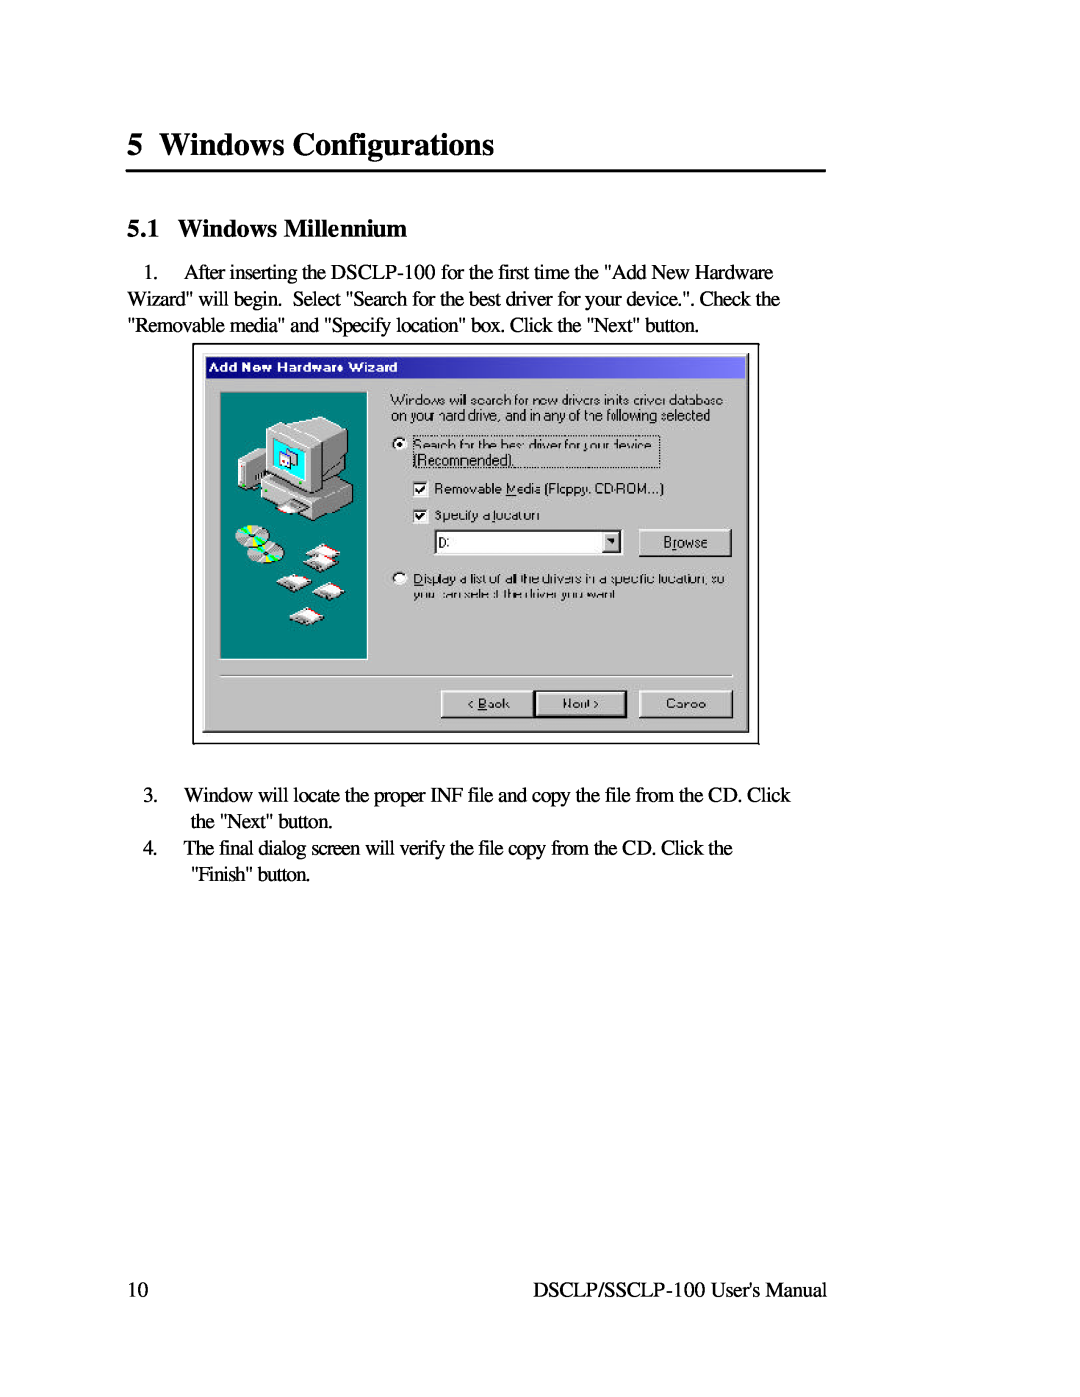 Quatech DSCLP-100 user manual Windows Configurations, Windows Millennium 